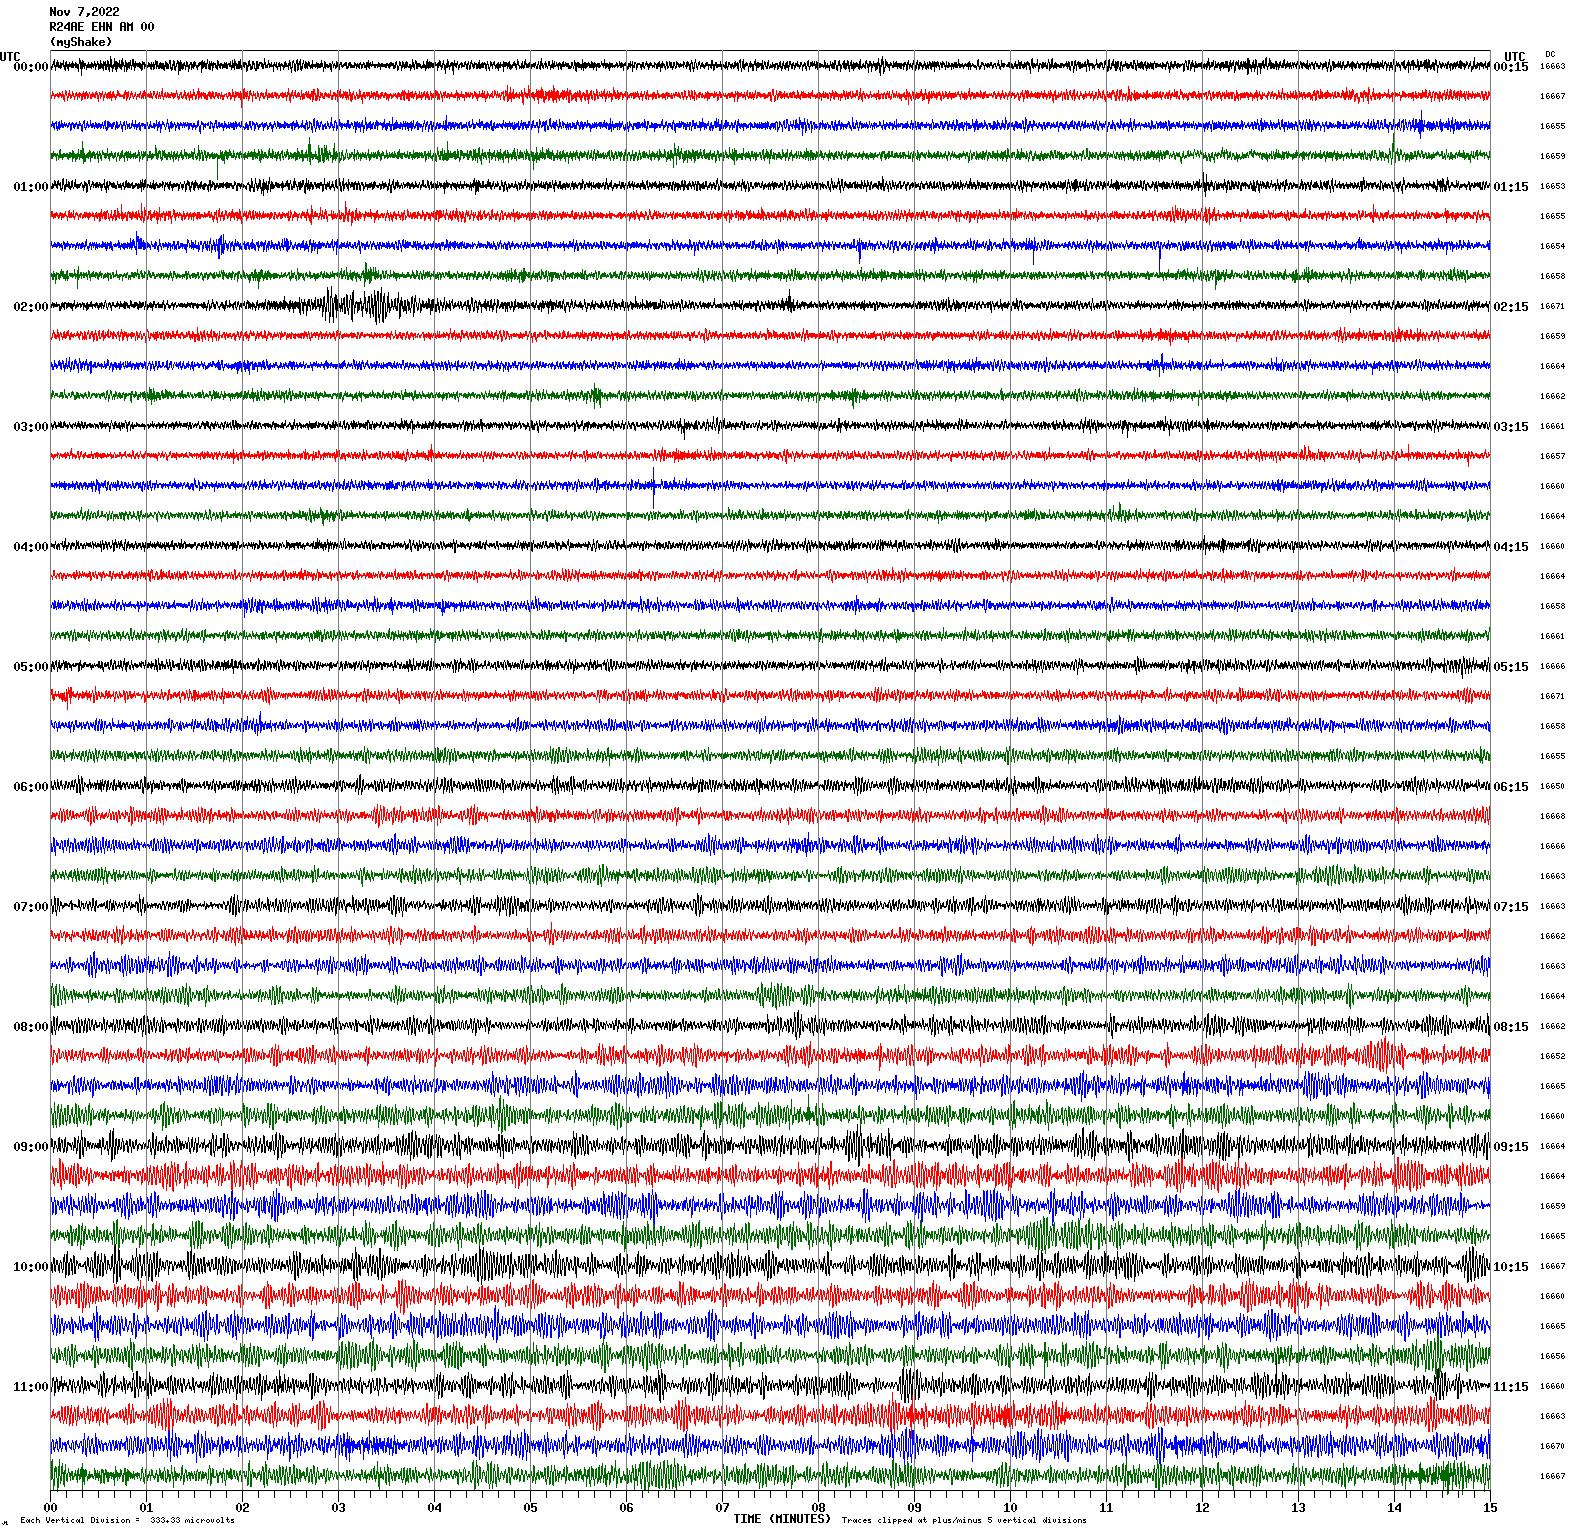 /seismic-data/R24AE/R24AE_EHN_AM_00.2022110700.gif